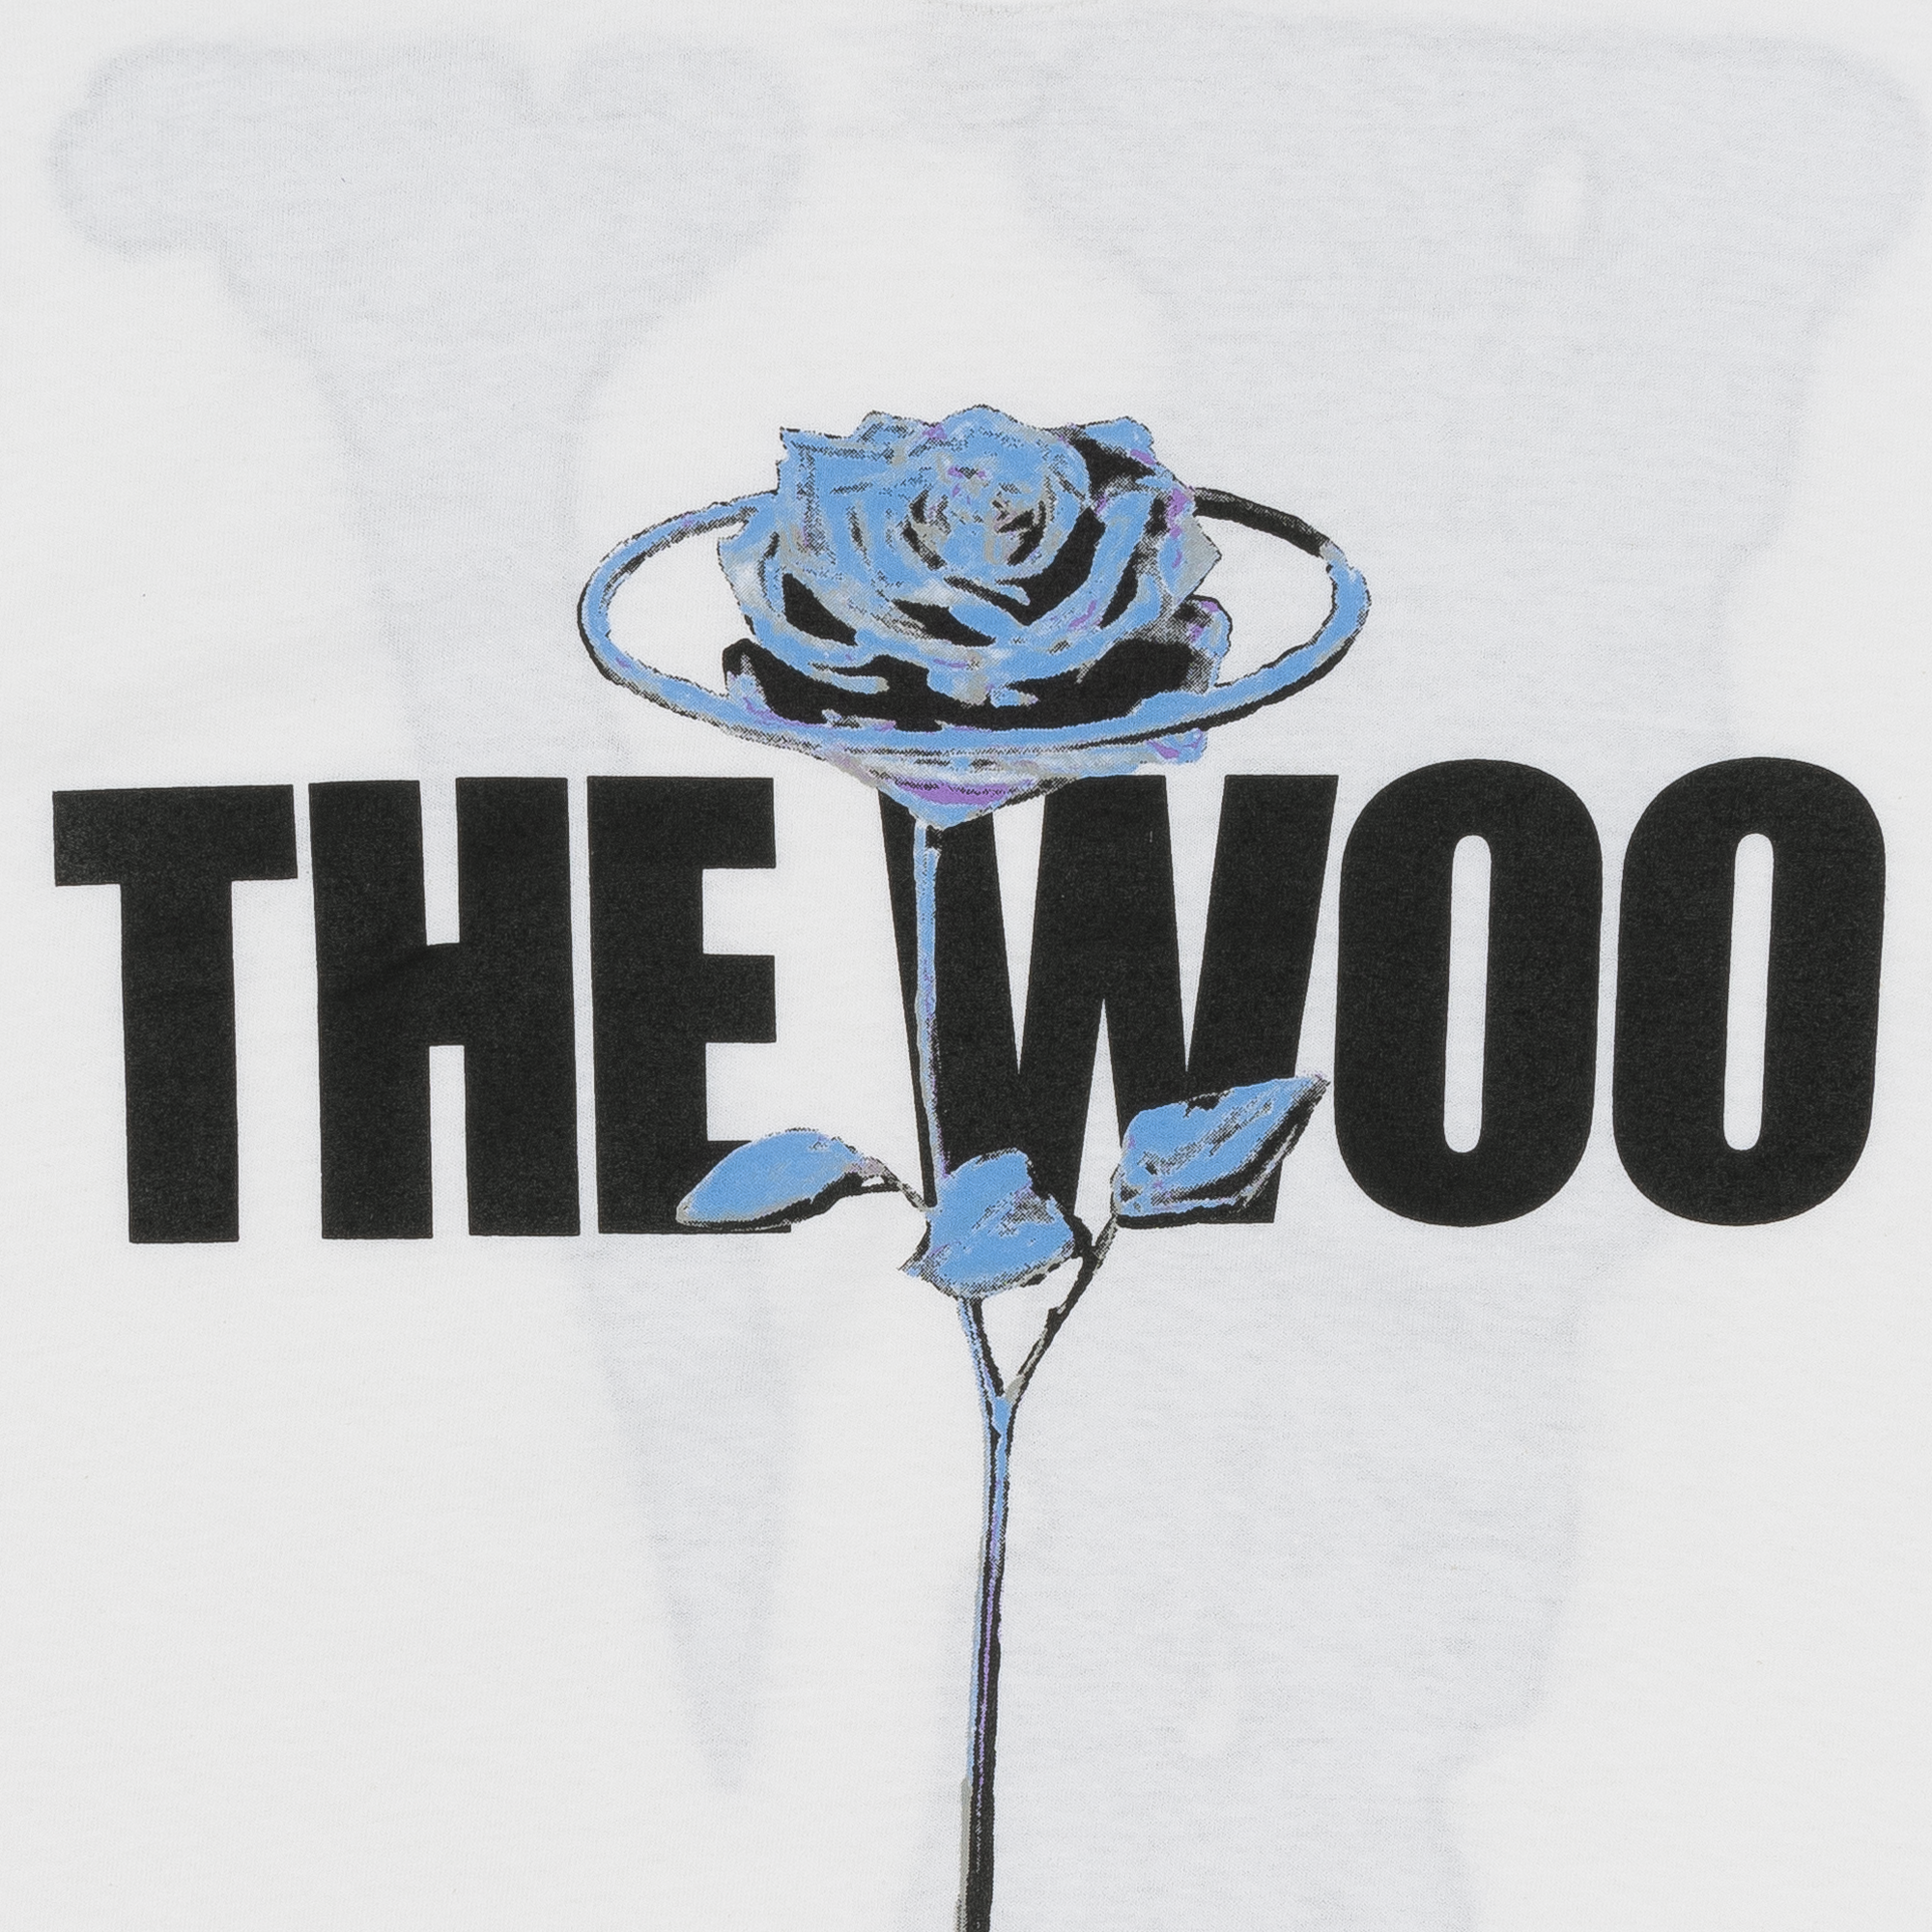 Vlone x Pop Smoke The Woo T-Shirt White-PLUS